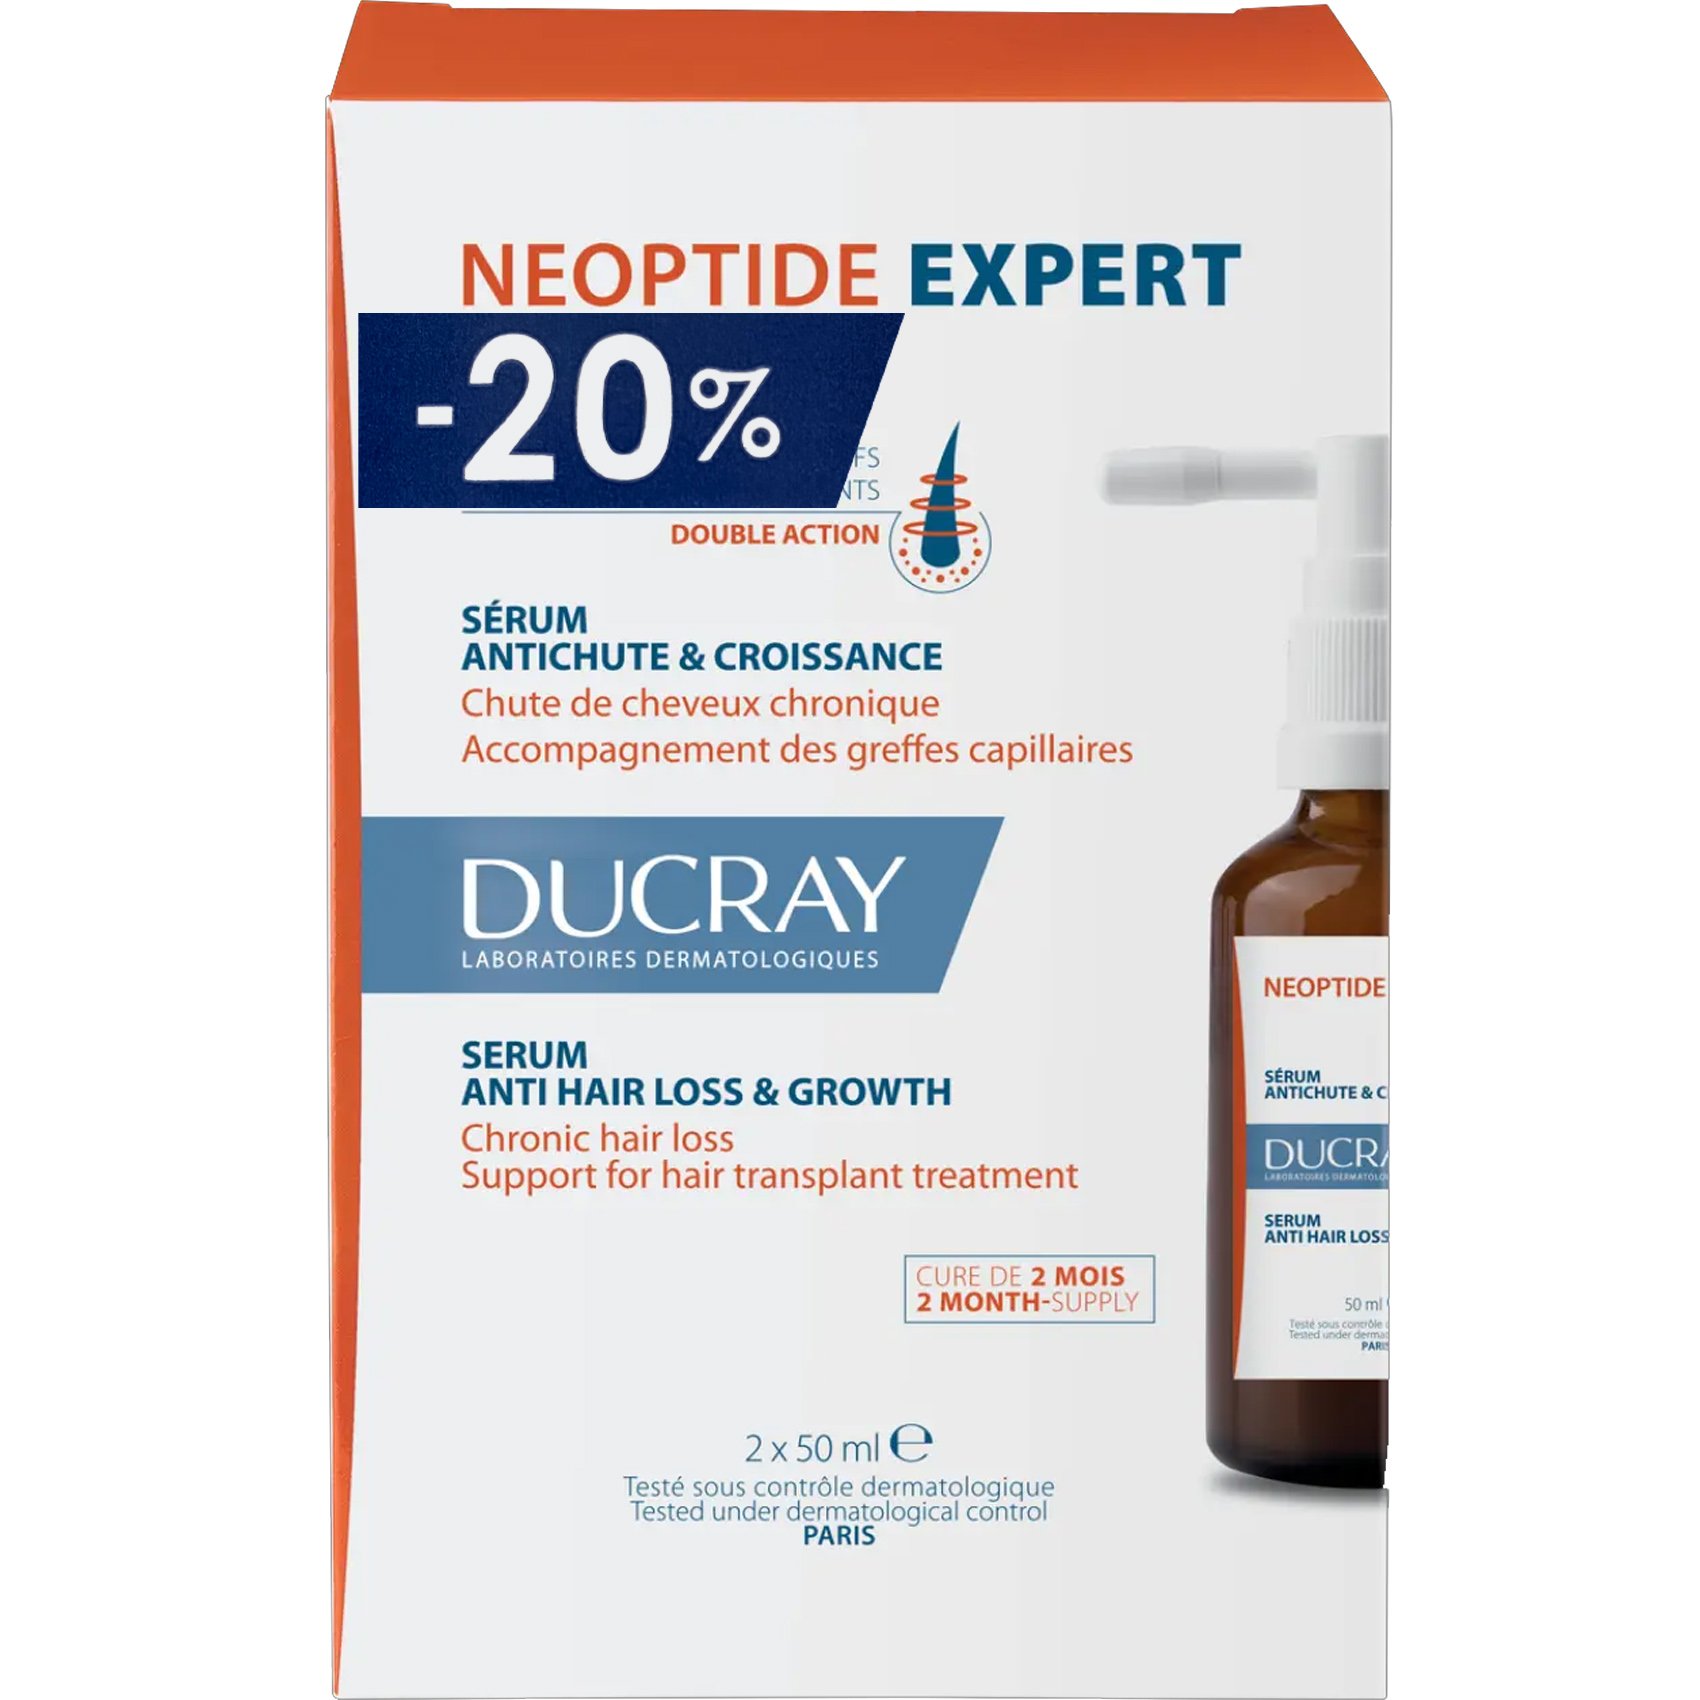 Ducray Ducray Neoptide Expert Double Action Anti-Hair Loss Serum Ορός με Δράση Κατά της Τριχόπτωσης που Προάγει την Ανάπτυξη των Μαλλιών 2x50ml σε Ειδική Τιμή